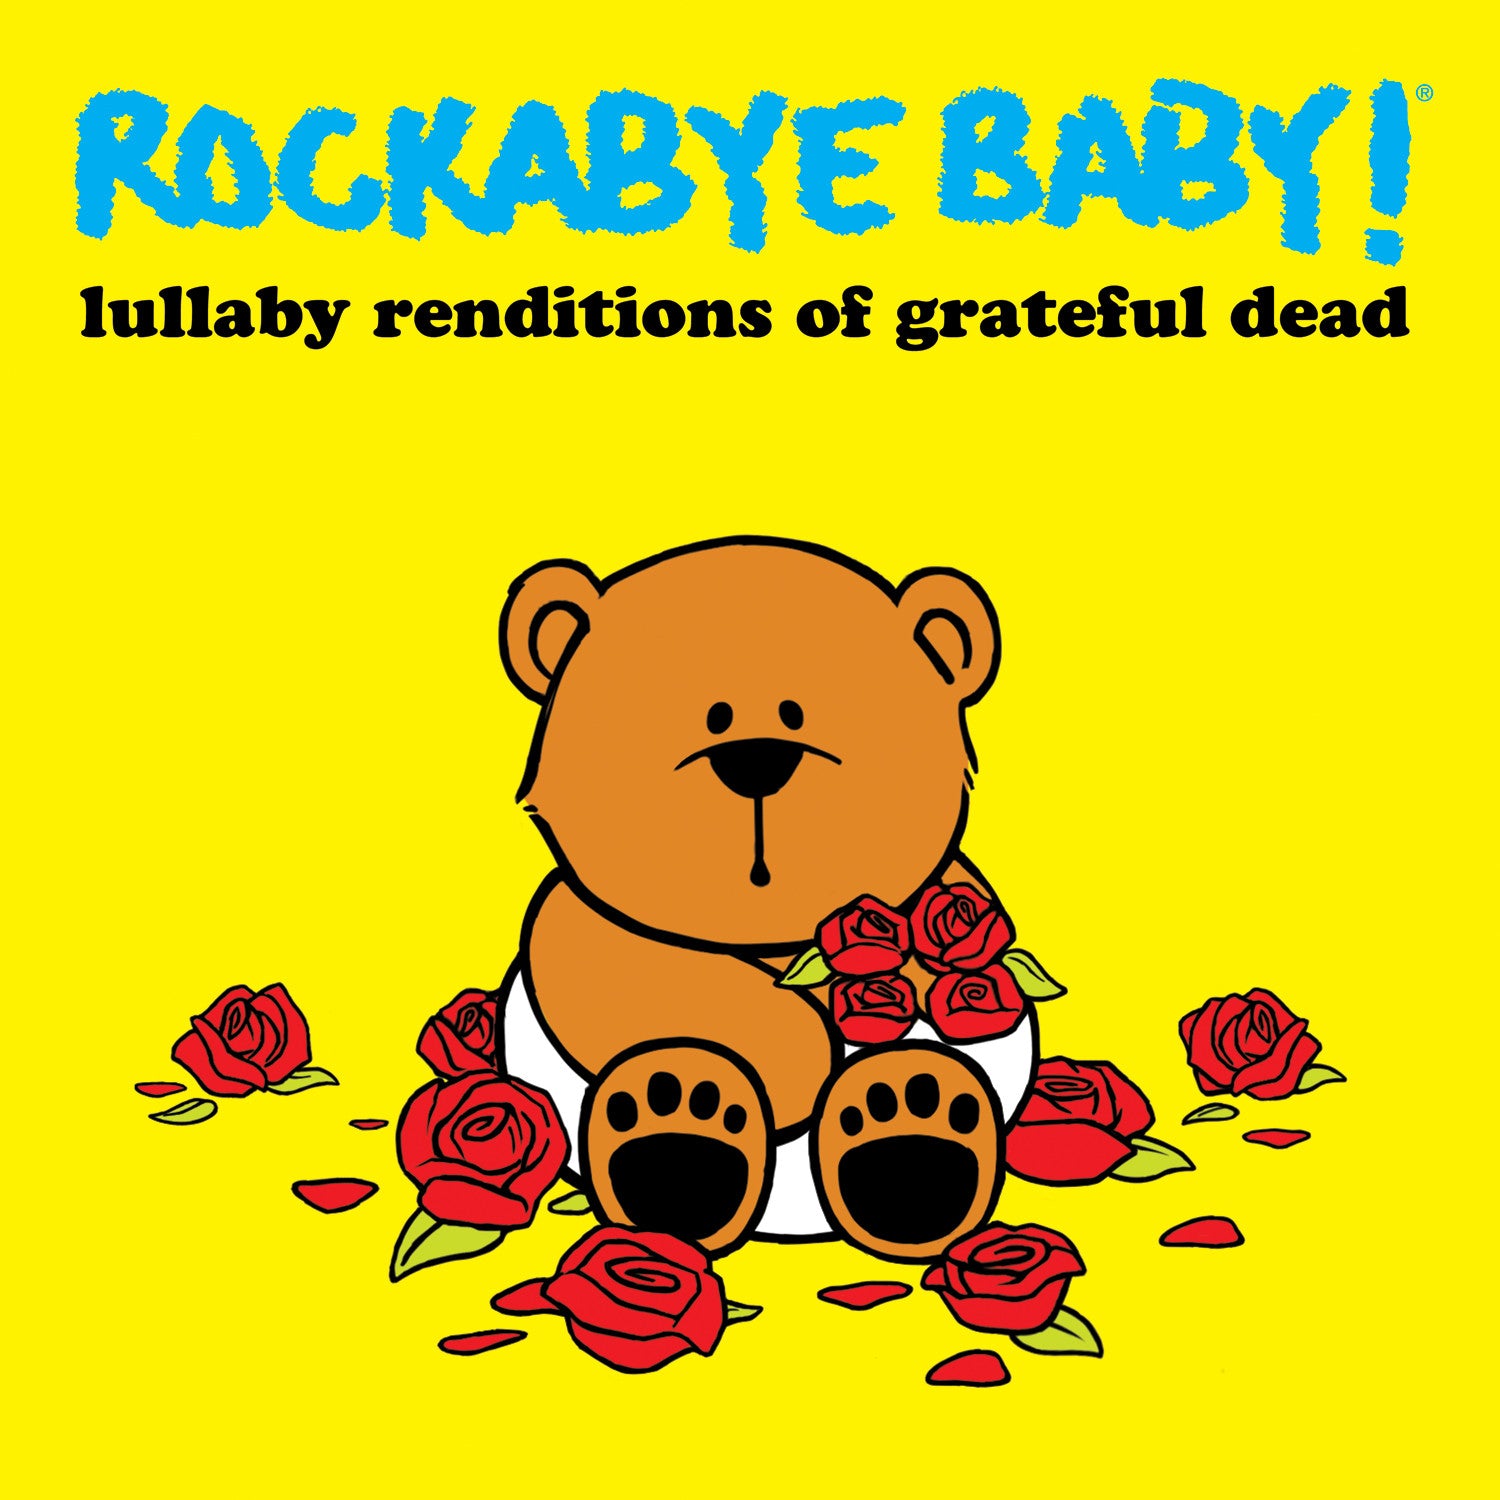 rockabye baby lullaby renditions grateful dead